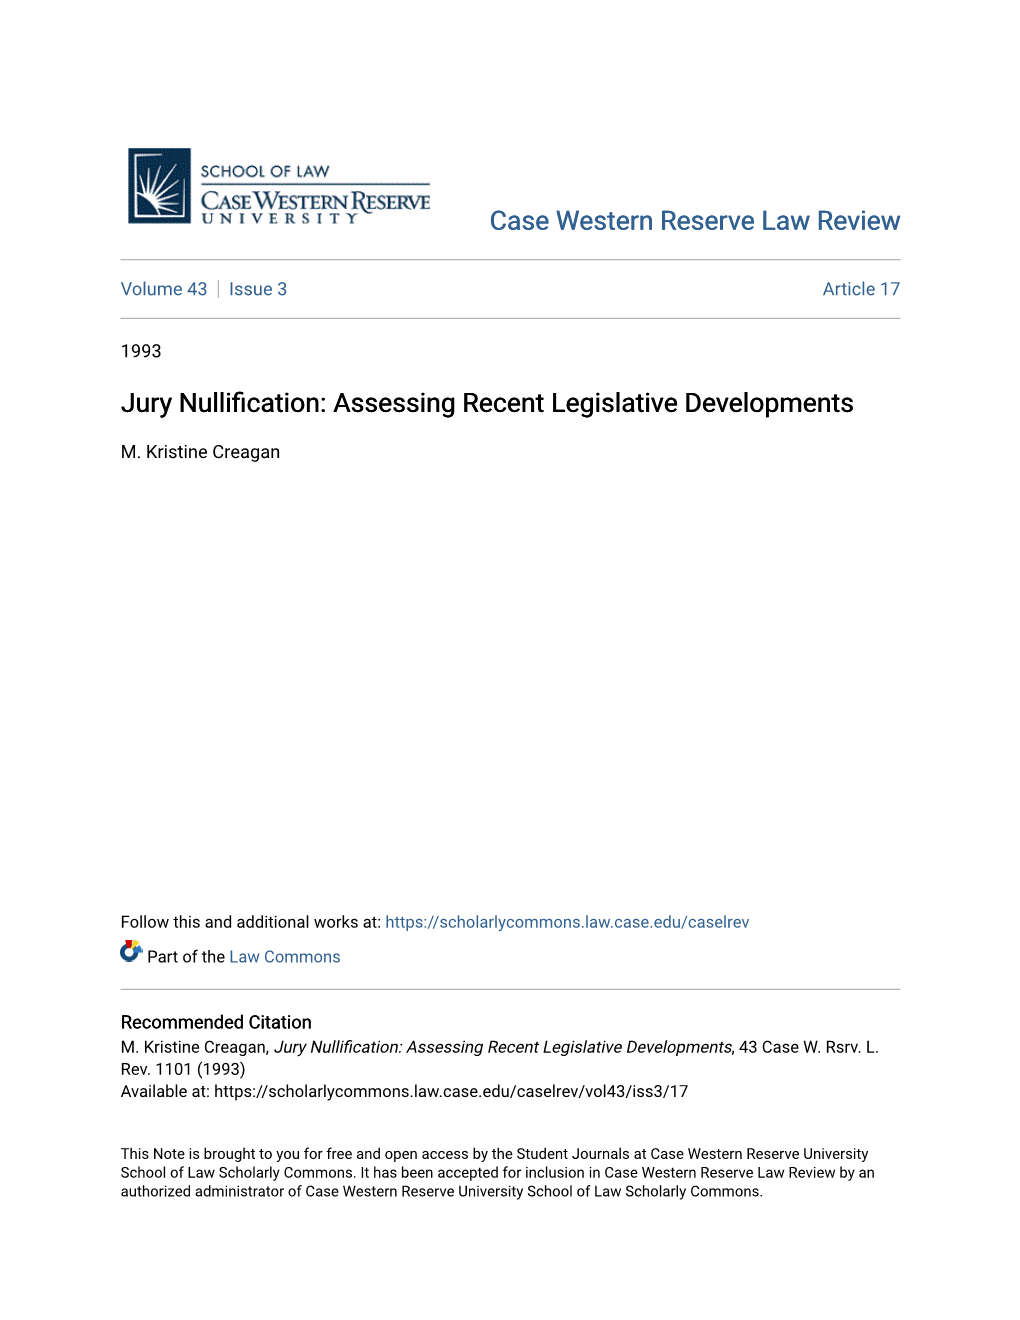 Jury Nullification: Assessing Recent Legislative Developments